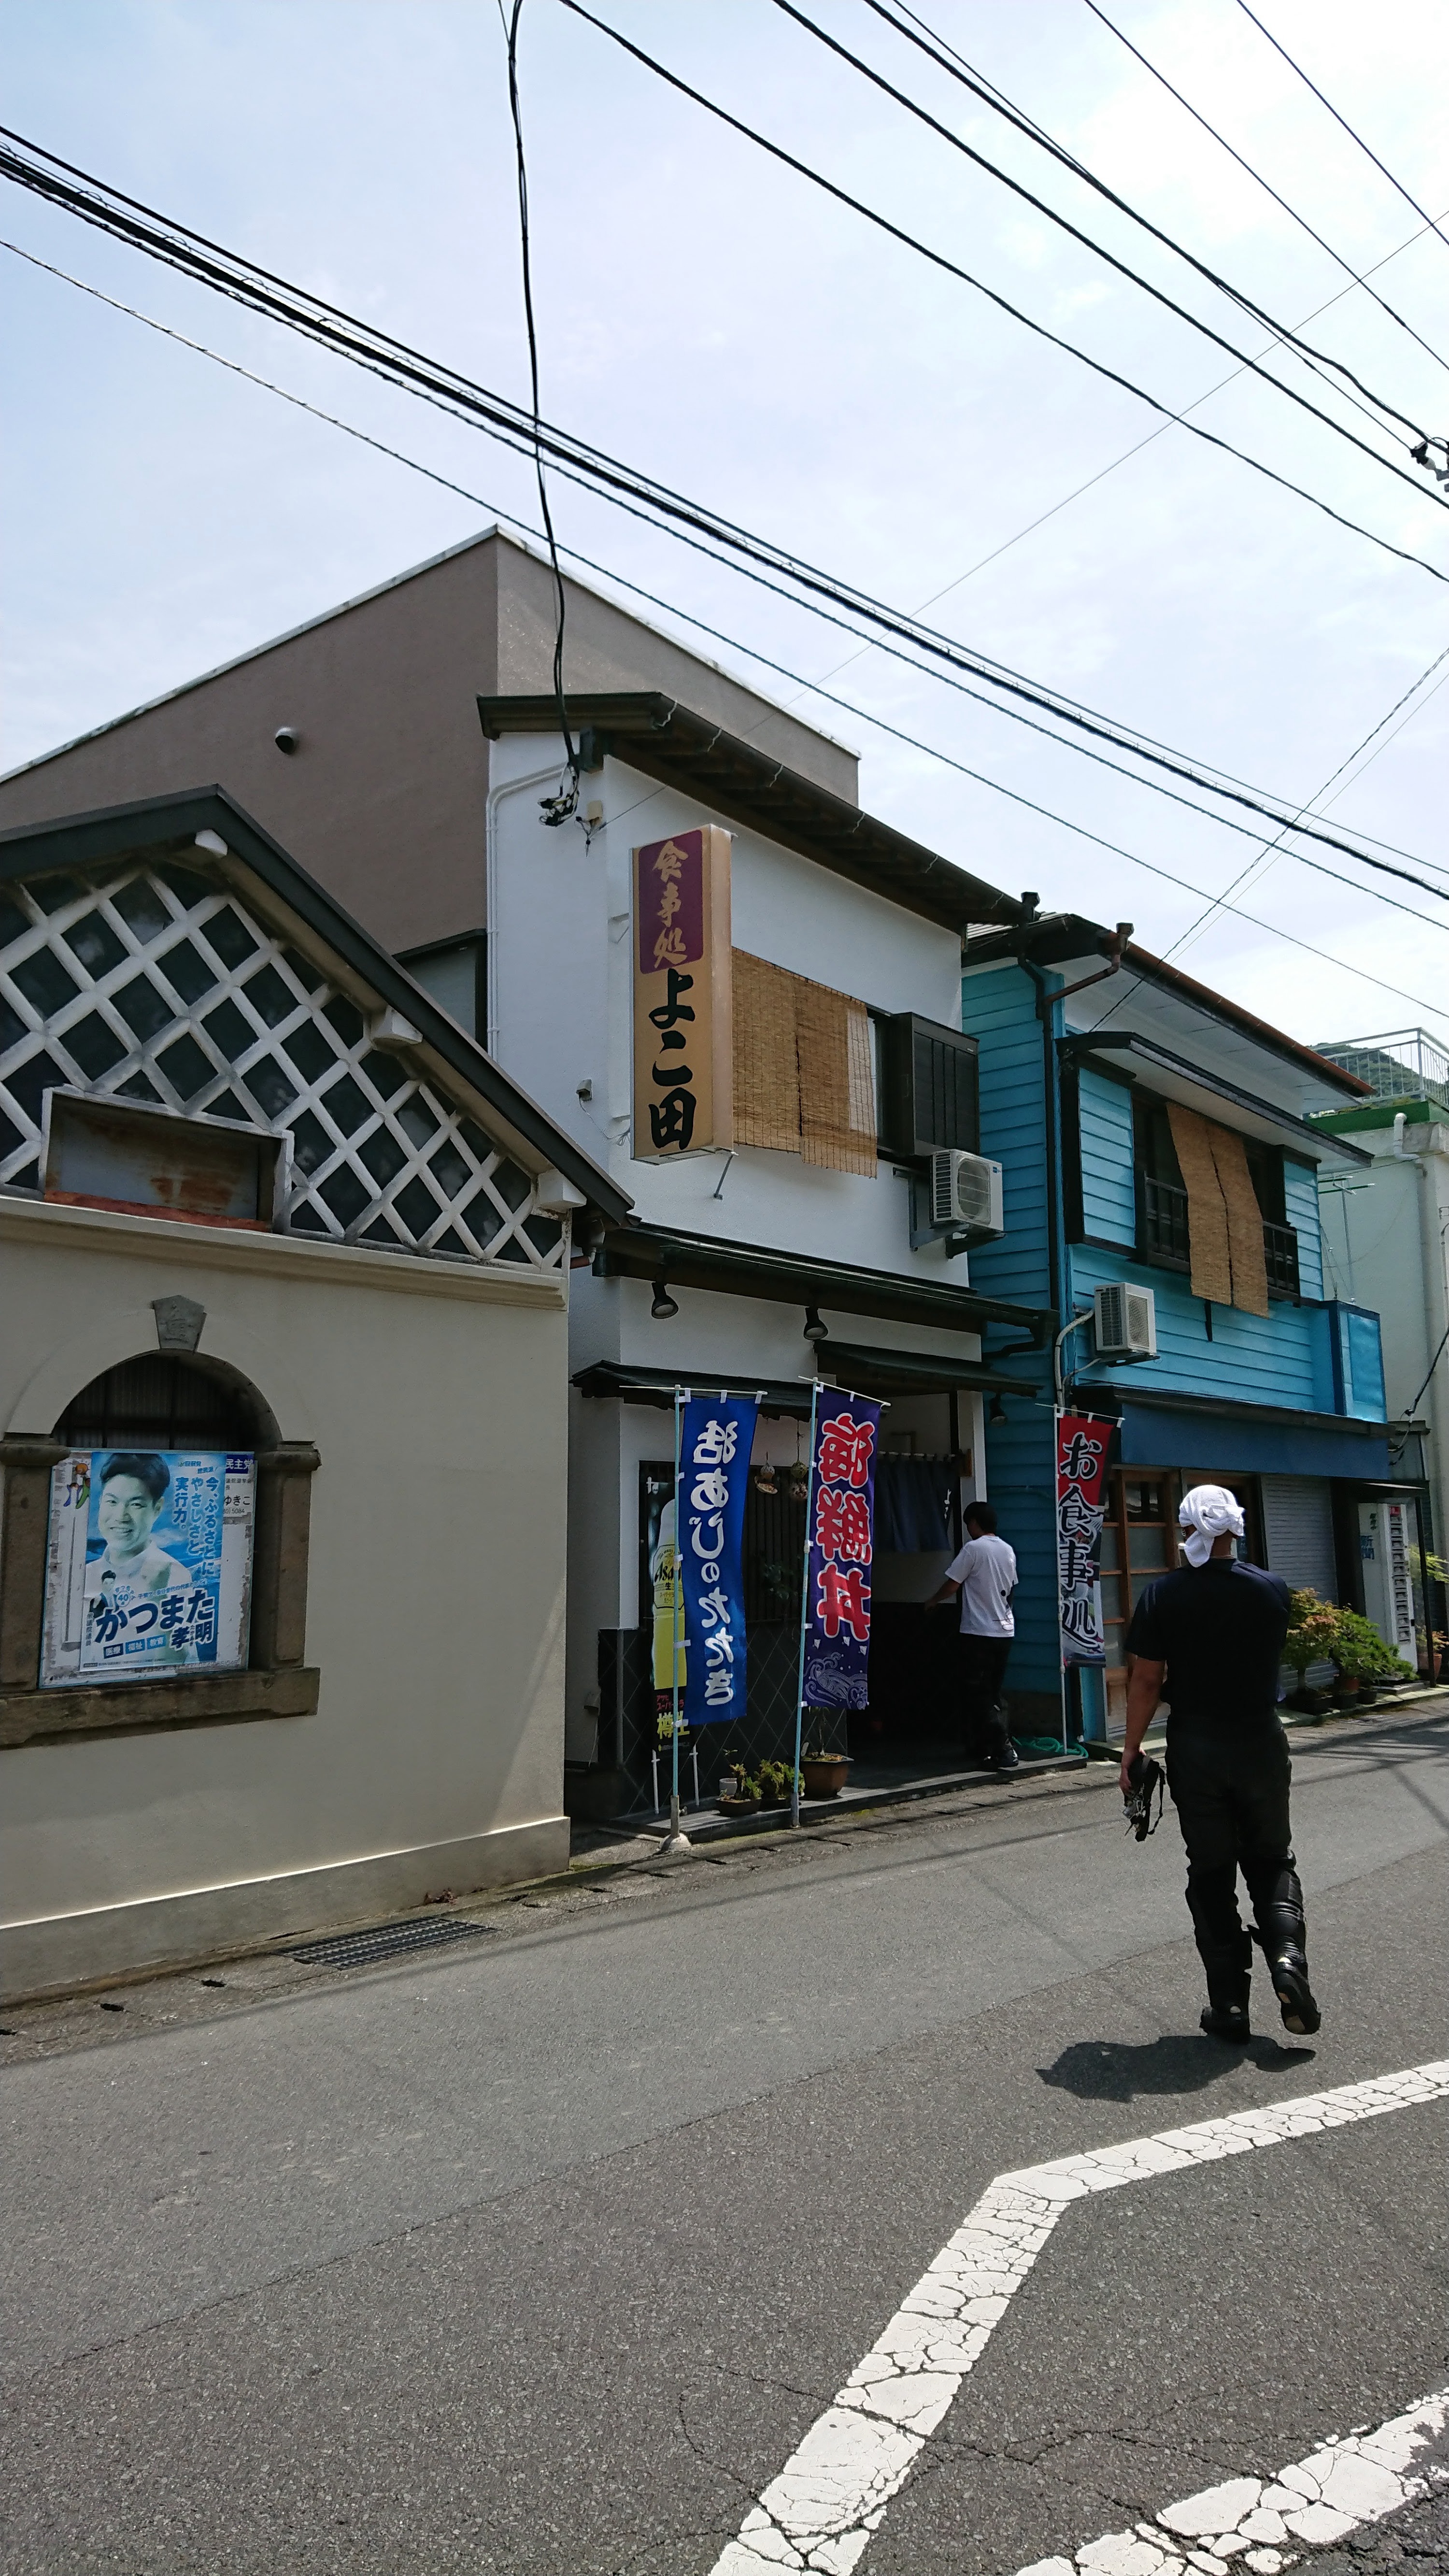 mixi関東近郊でツーリングが大好きな人「伊豆半島ツーリング」